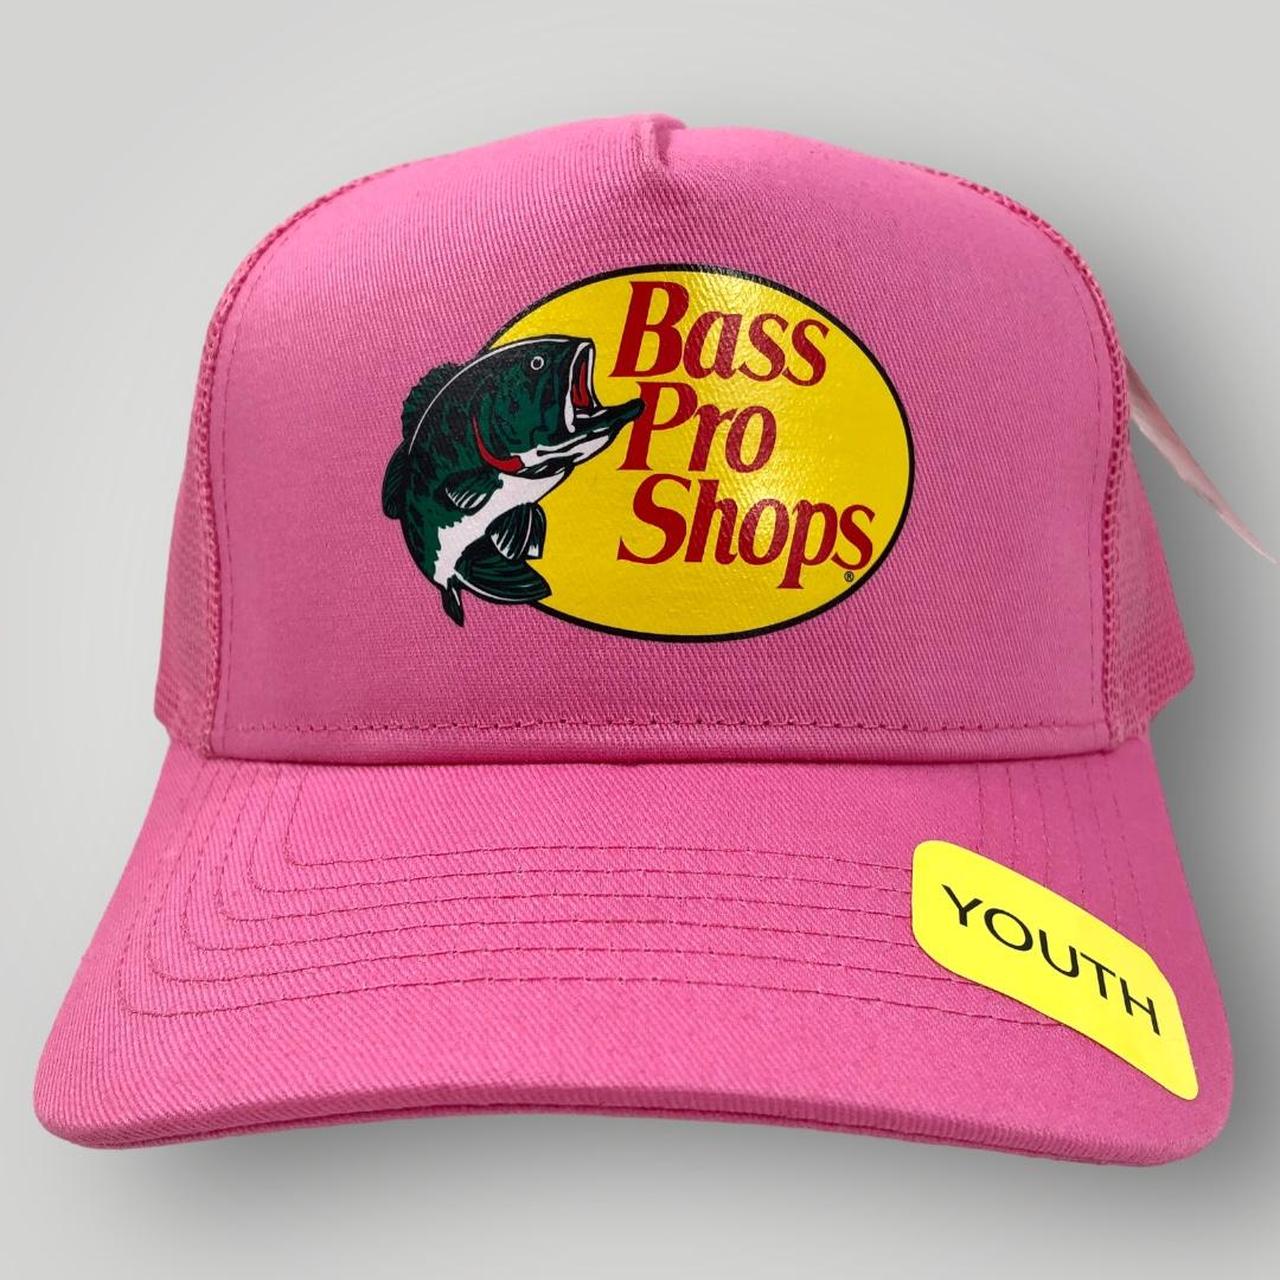 Bass Pro Shops Printed Pink (YOUTH) Trucker Mesh Cap - Depop